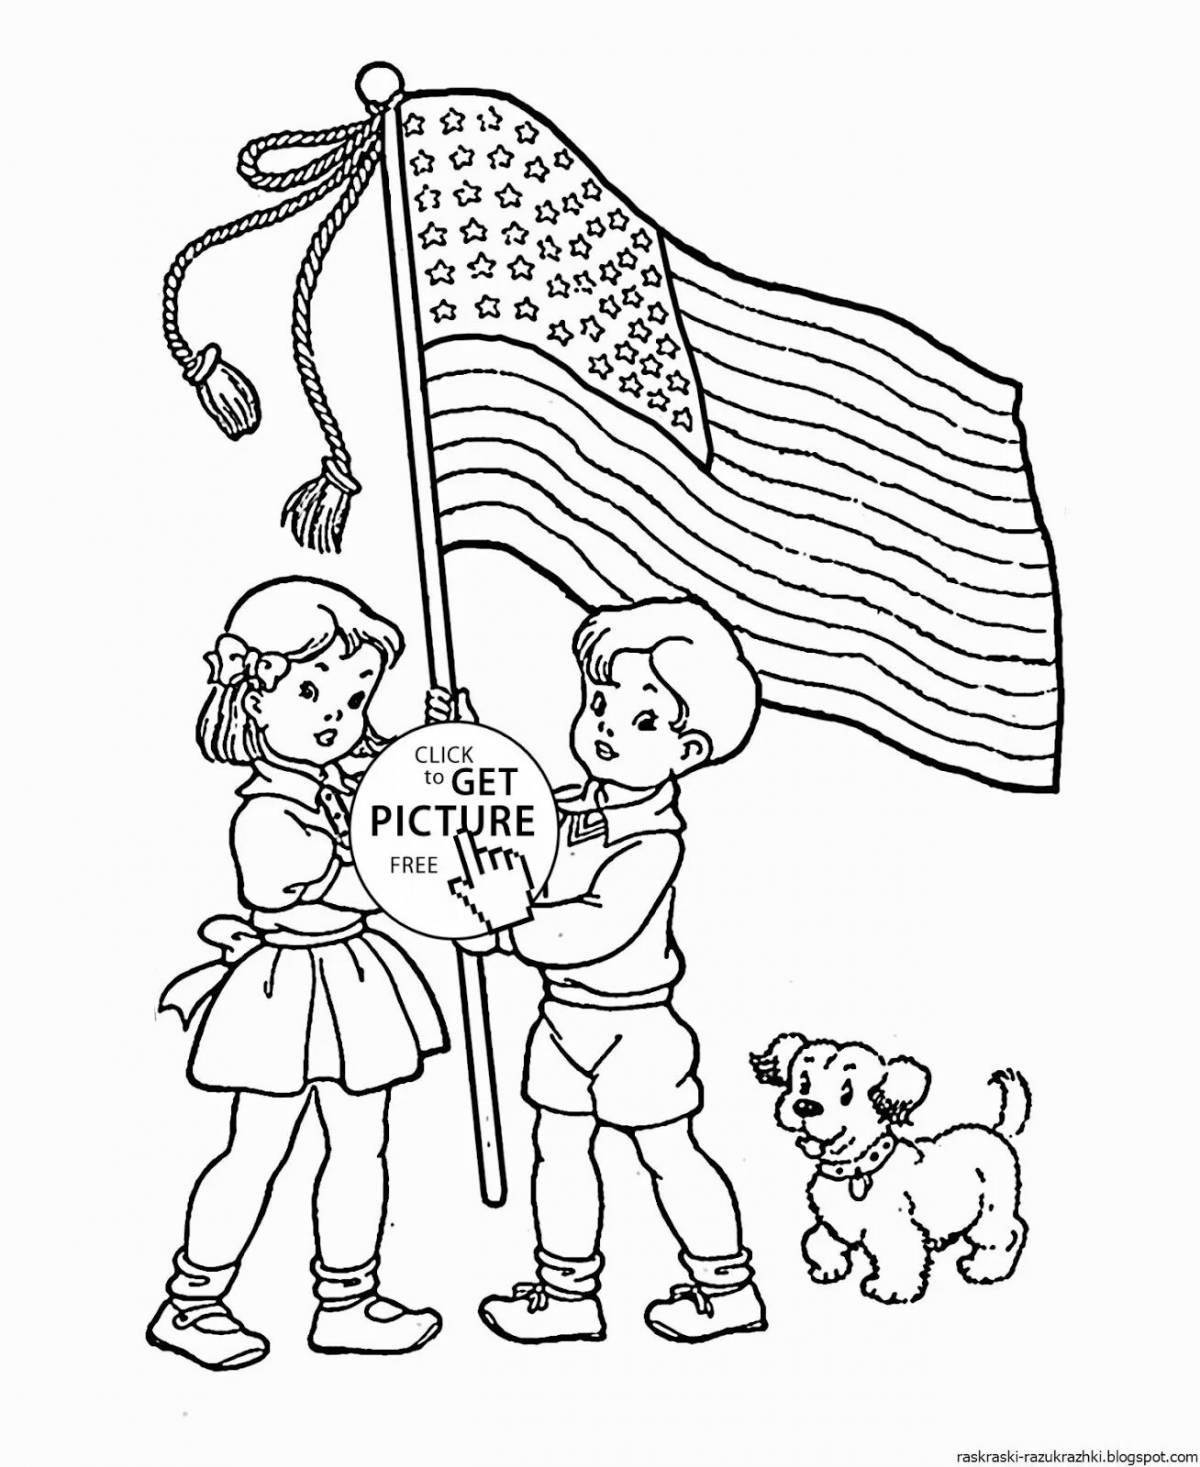 Radiant patriotic coloring book for kids